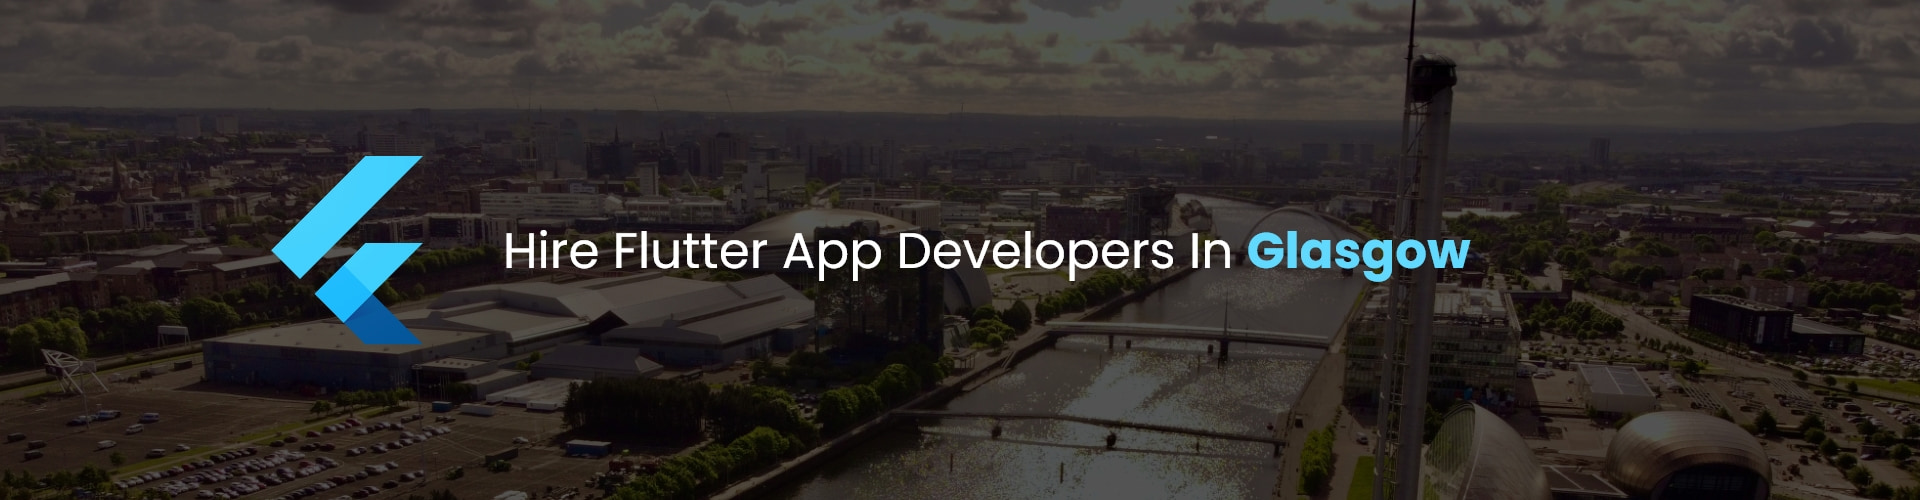 hire flutter app developers in glasgow